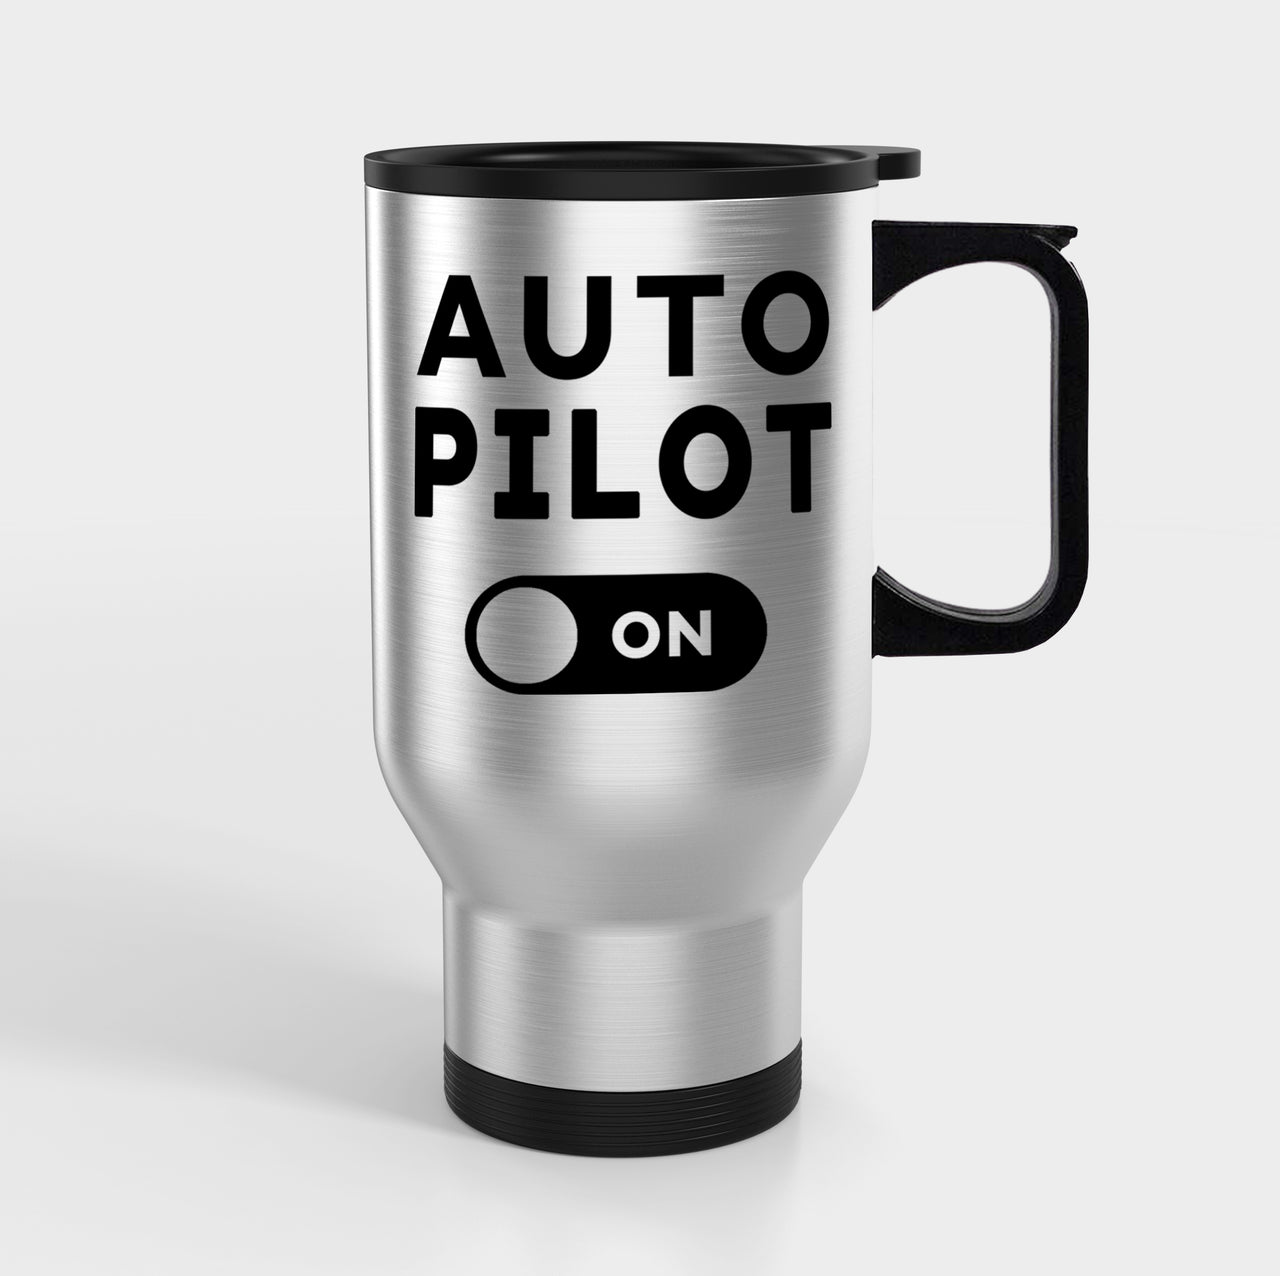 Auto Pilot ON Designed Travel Mugs (With Holder)